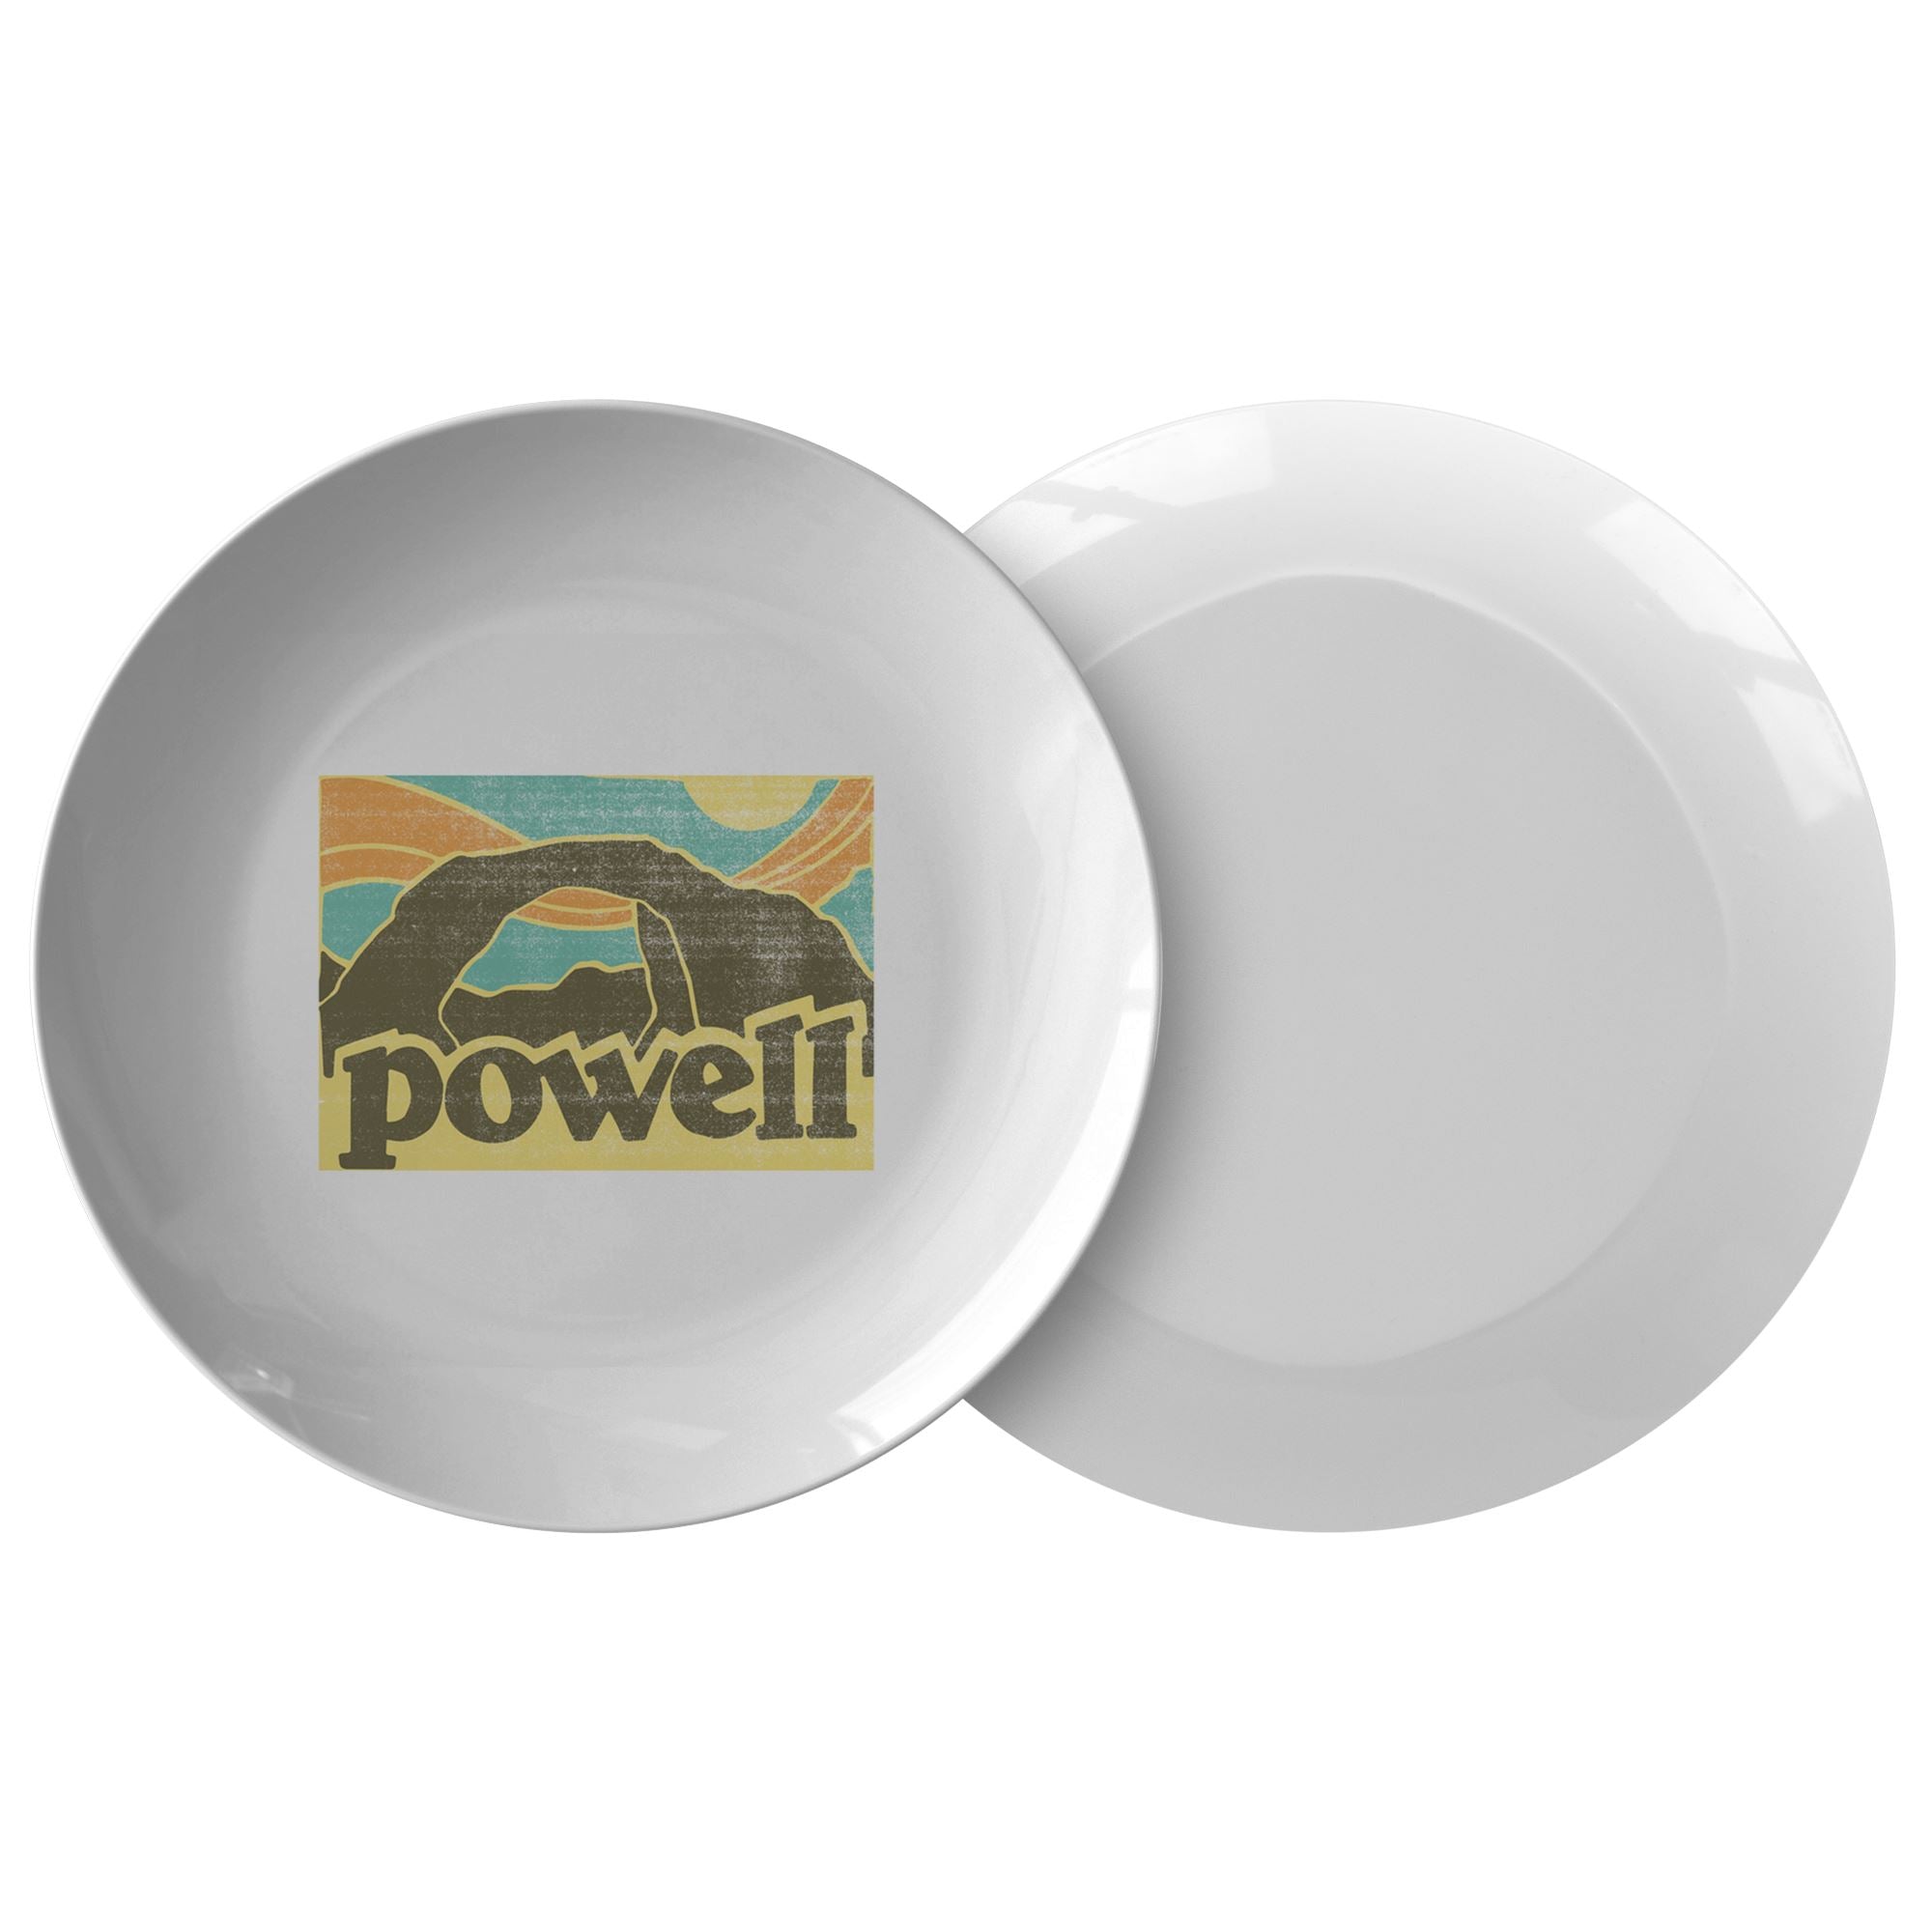 Retro Powell Plate - Houseboat Kings